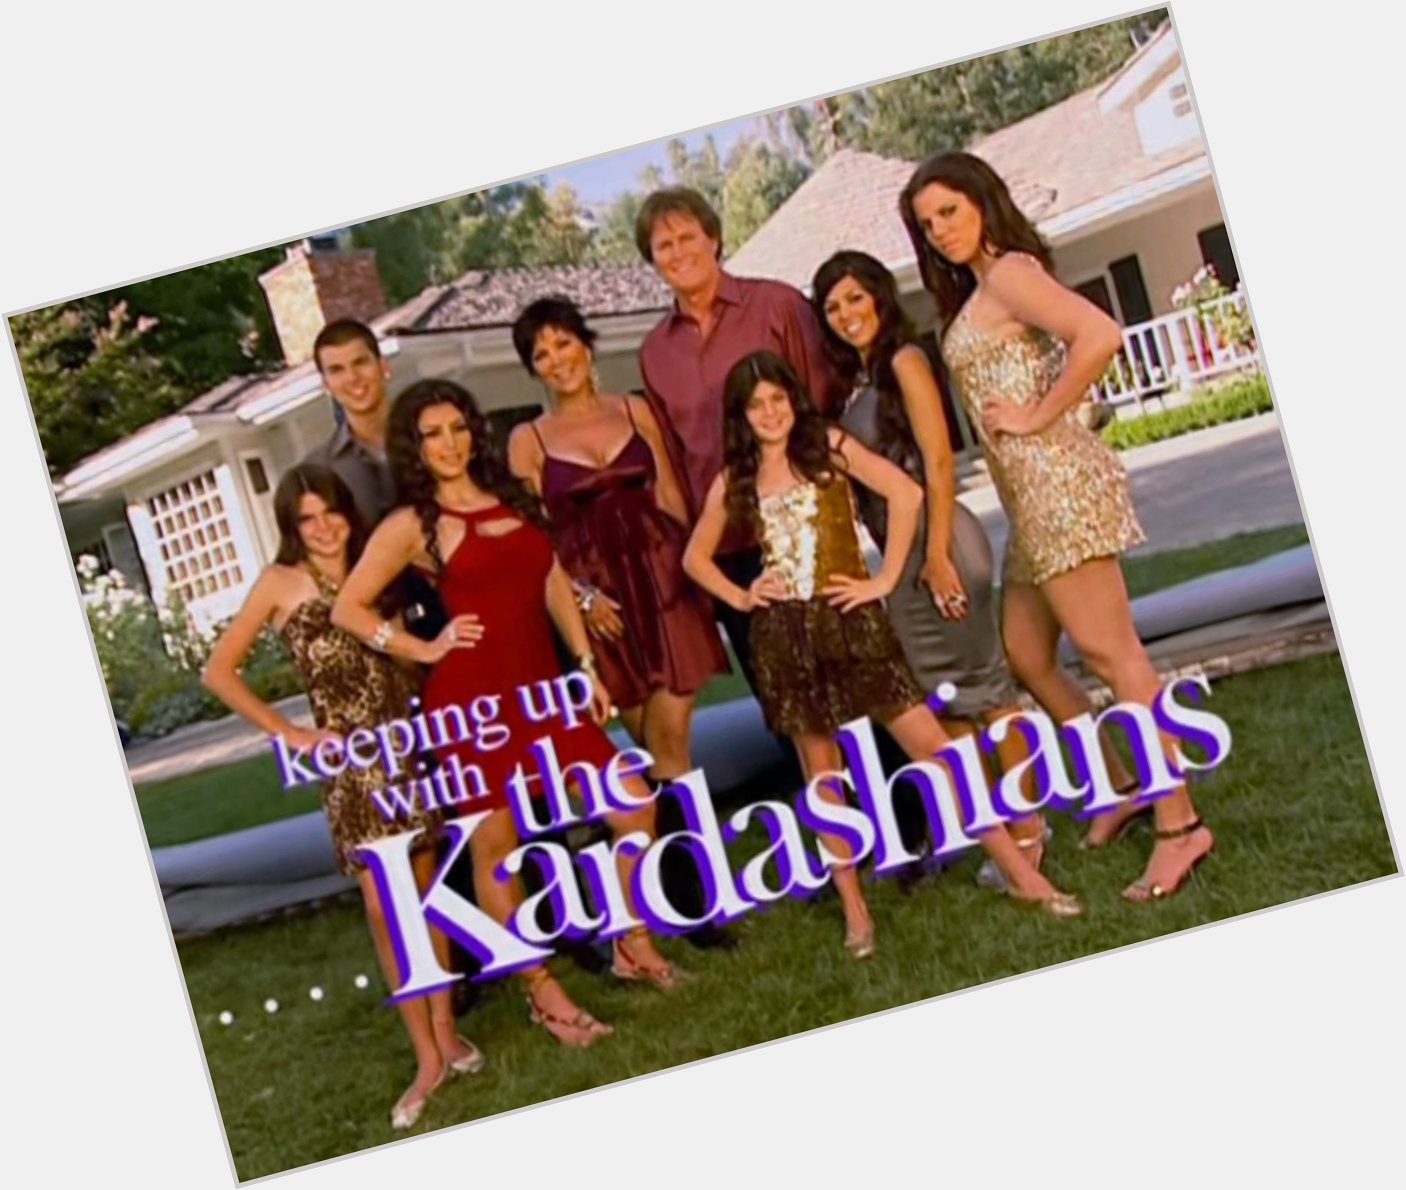 11/5:Happy 60th Birthday 2 Reality TV Star Kris Jenner! TV Fave=Kardashian shows+more!  